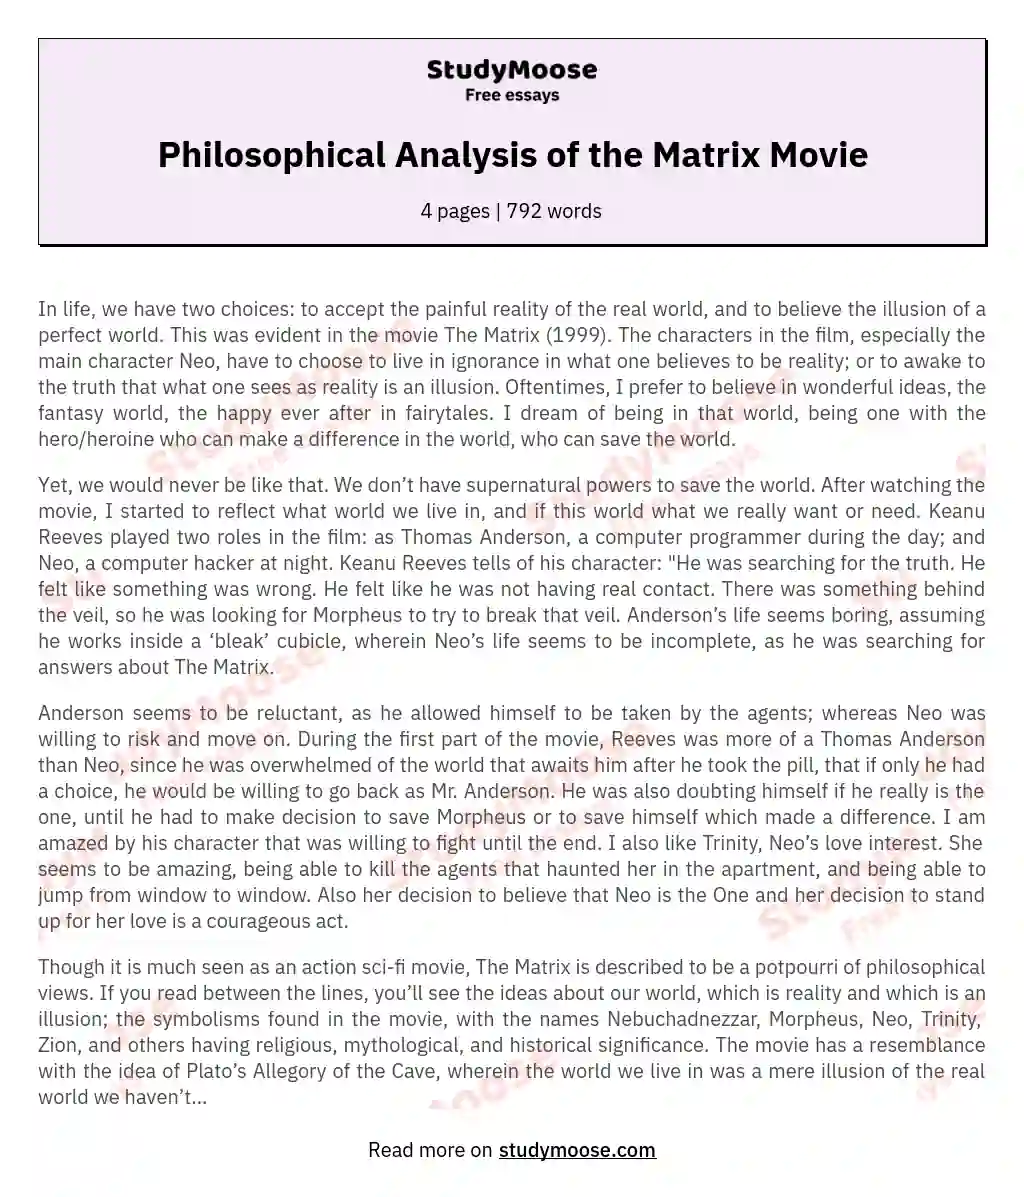 Philosophical Analysis of the Matrix Movie essay